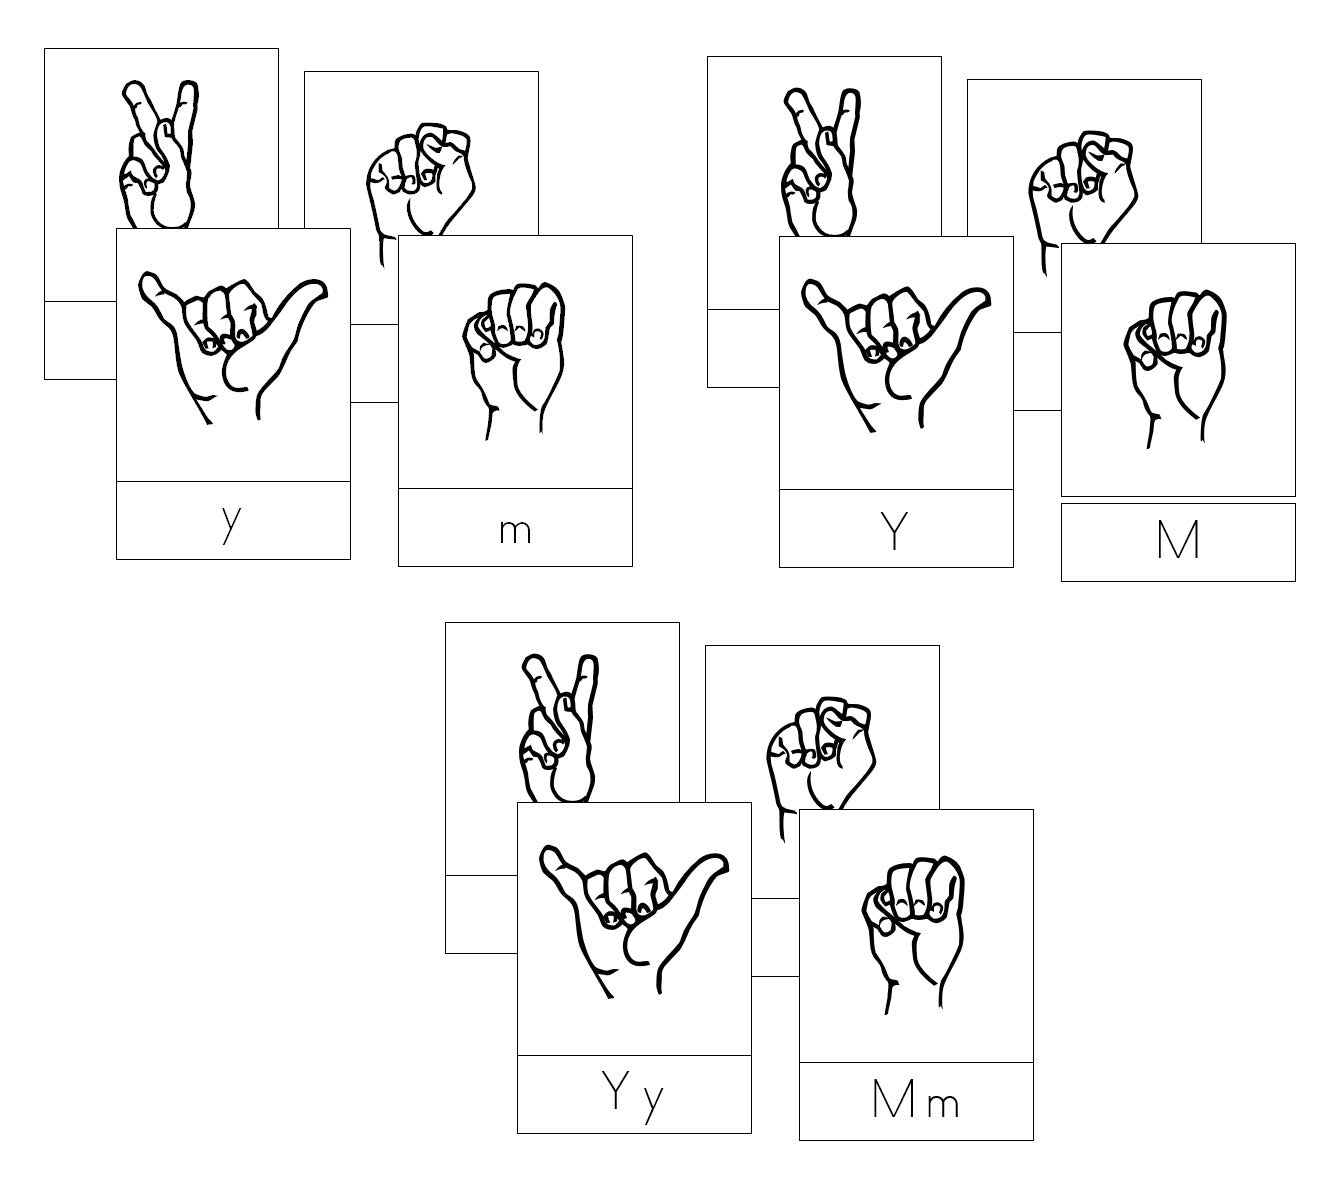 American Sign Language Cards Montessori Print Shop